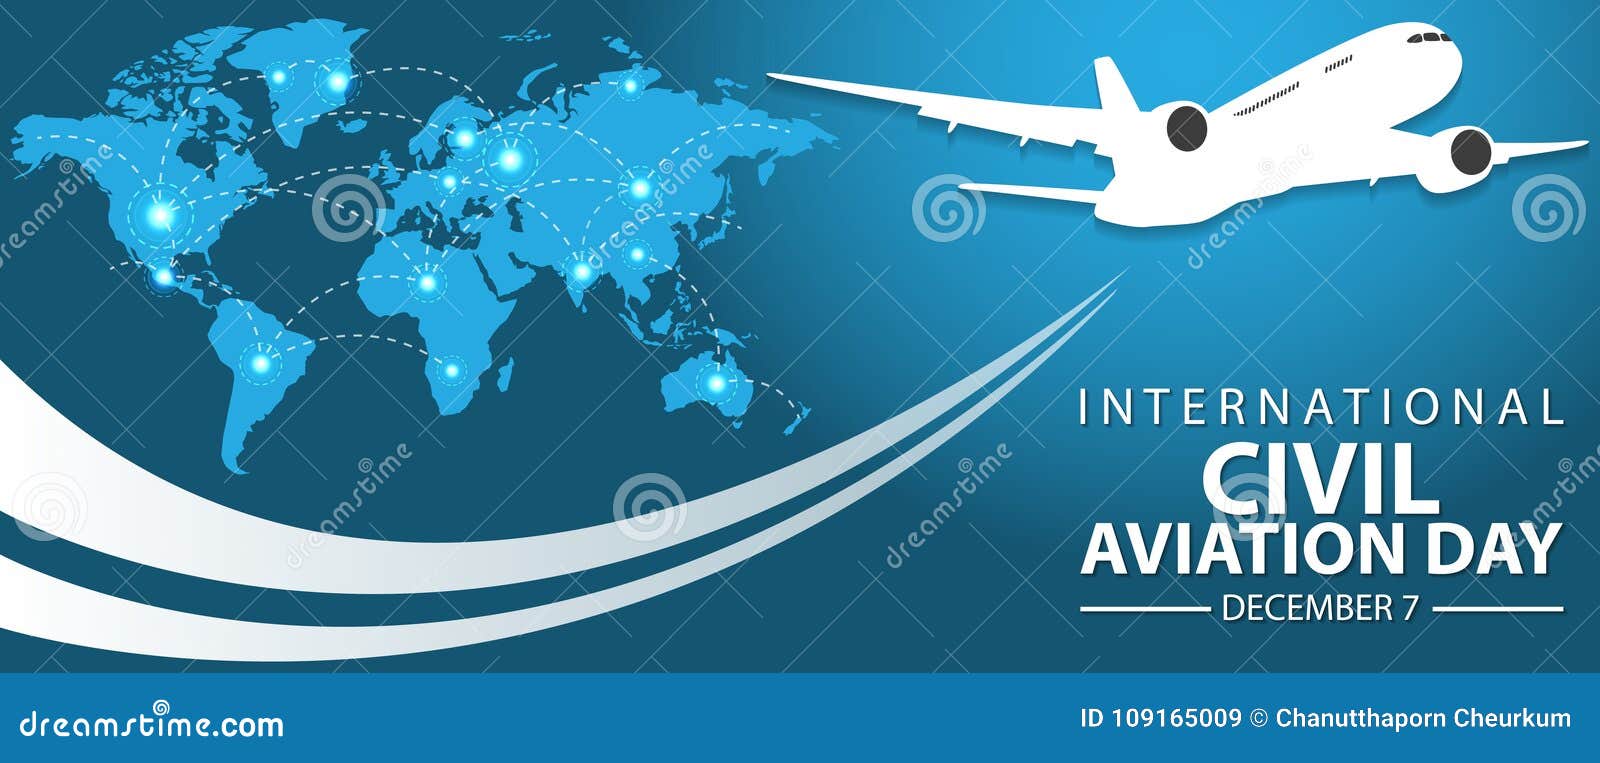 international civil aviation day